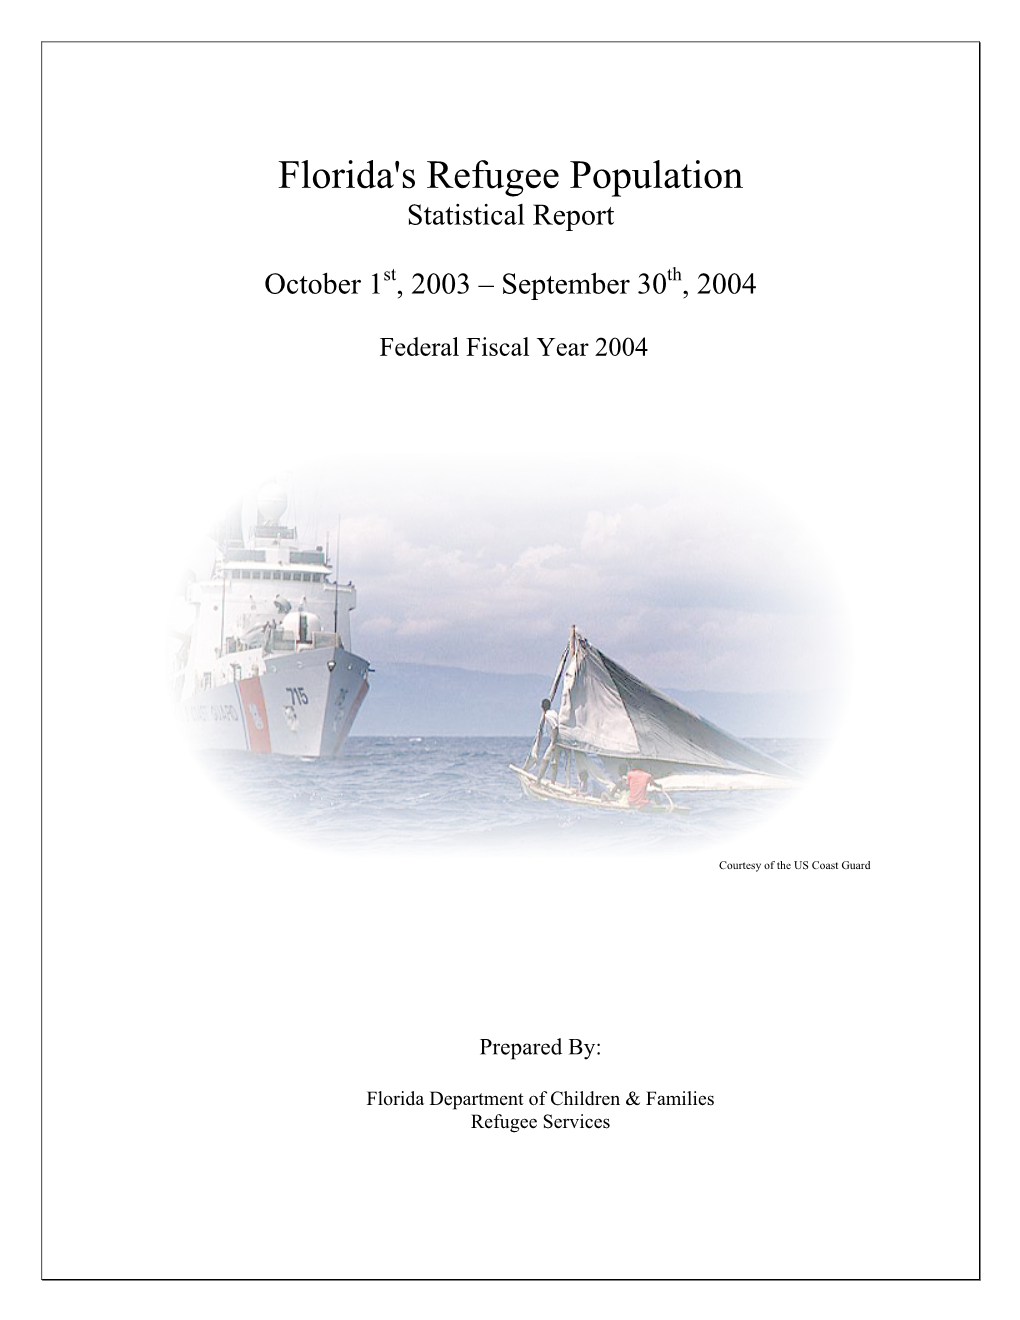 Florida's Refugee and Entrant Arrivals